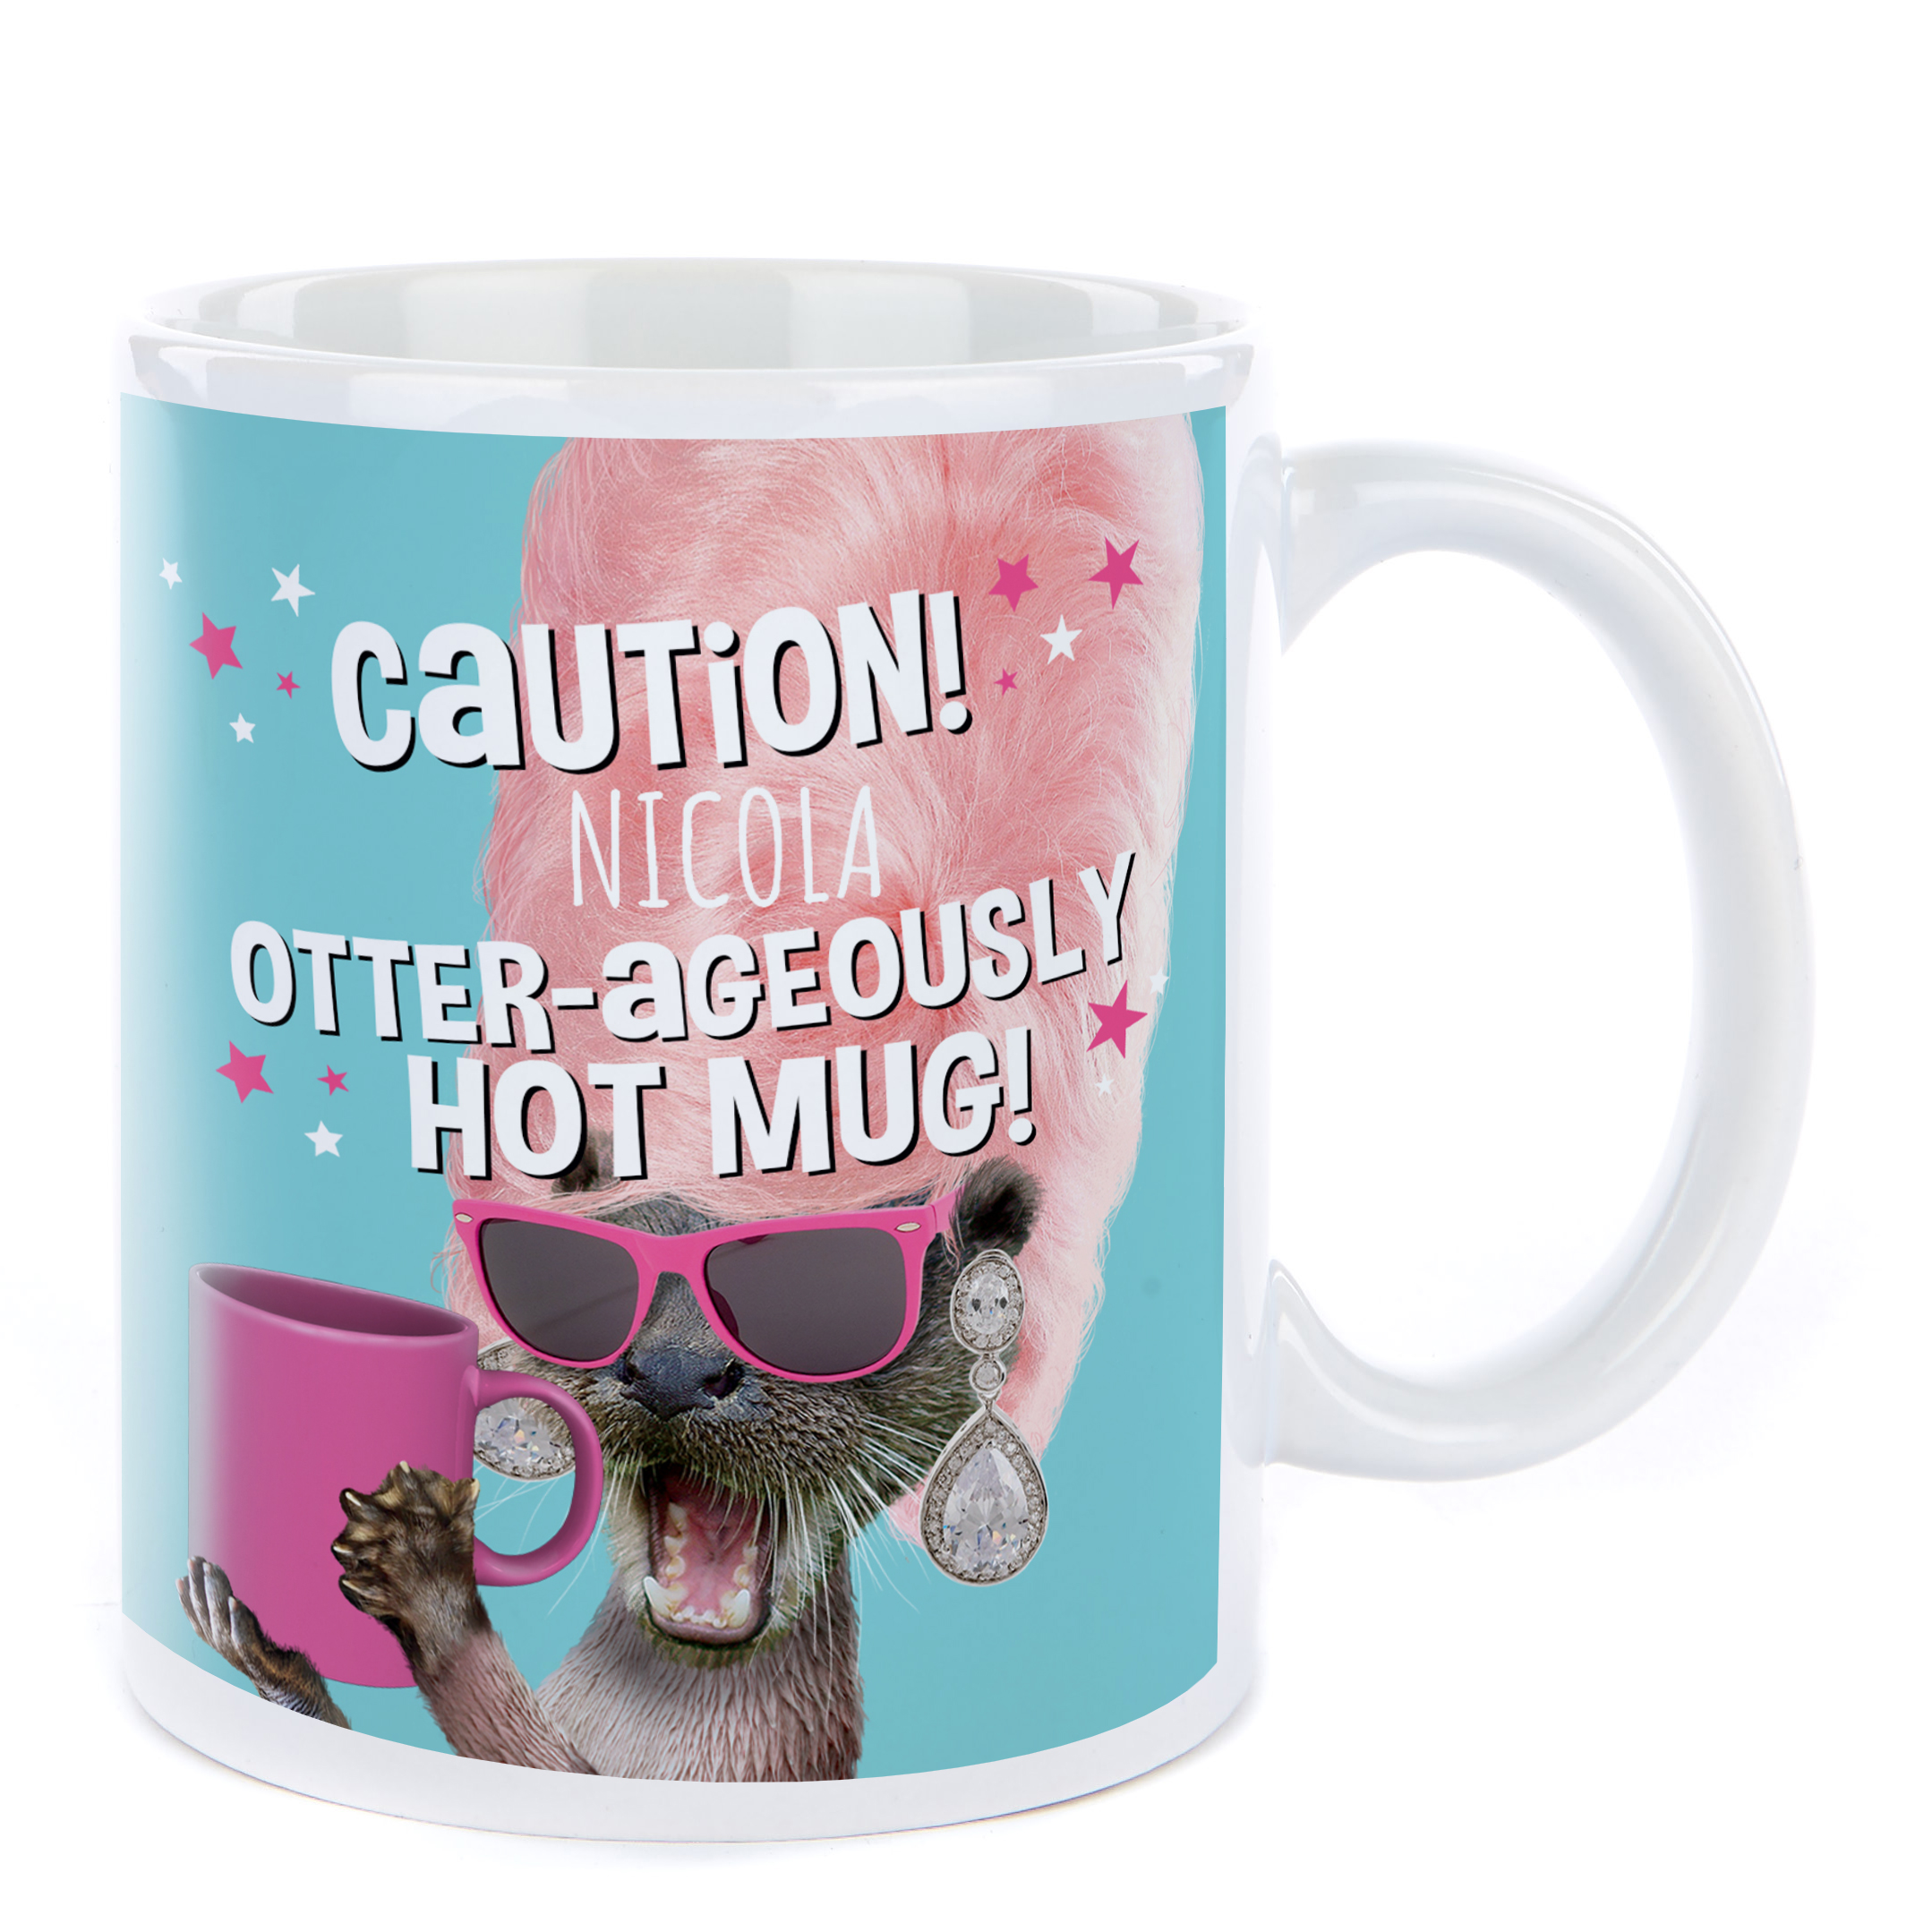 Personalised Pink Pet Shop Mug - Otter-ageously Hot